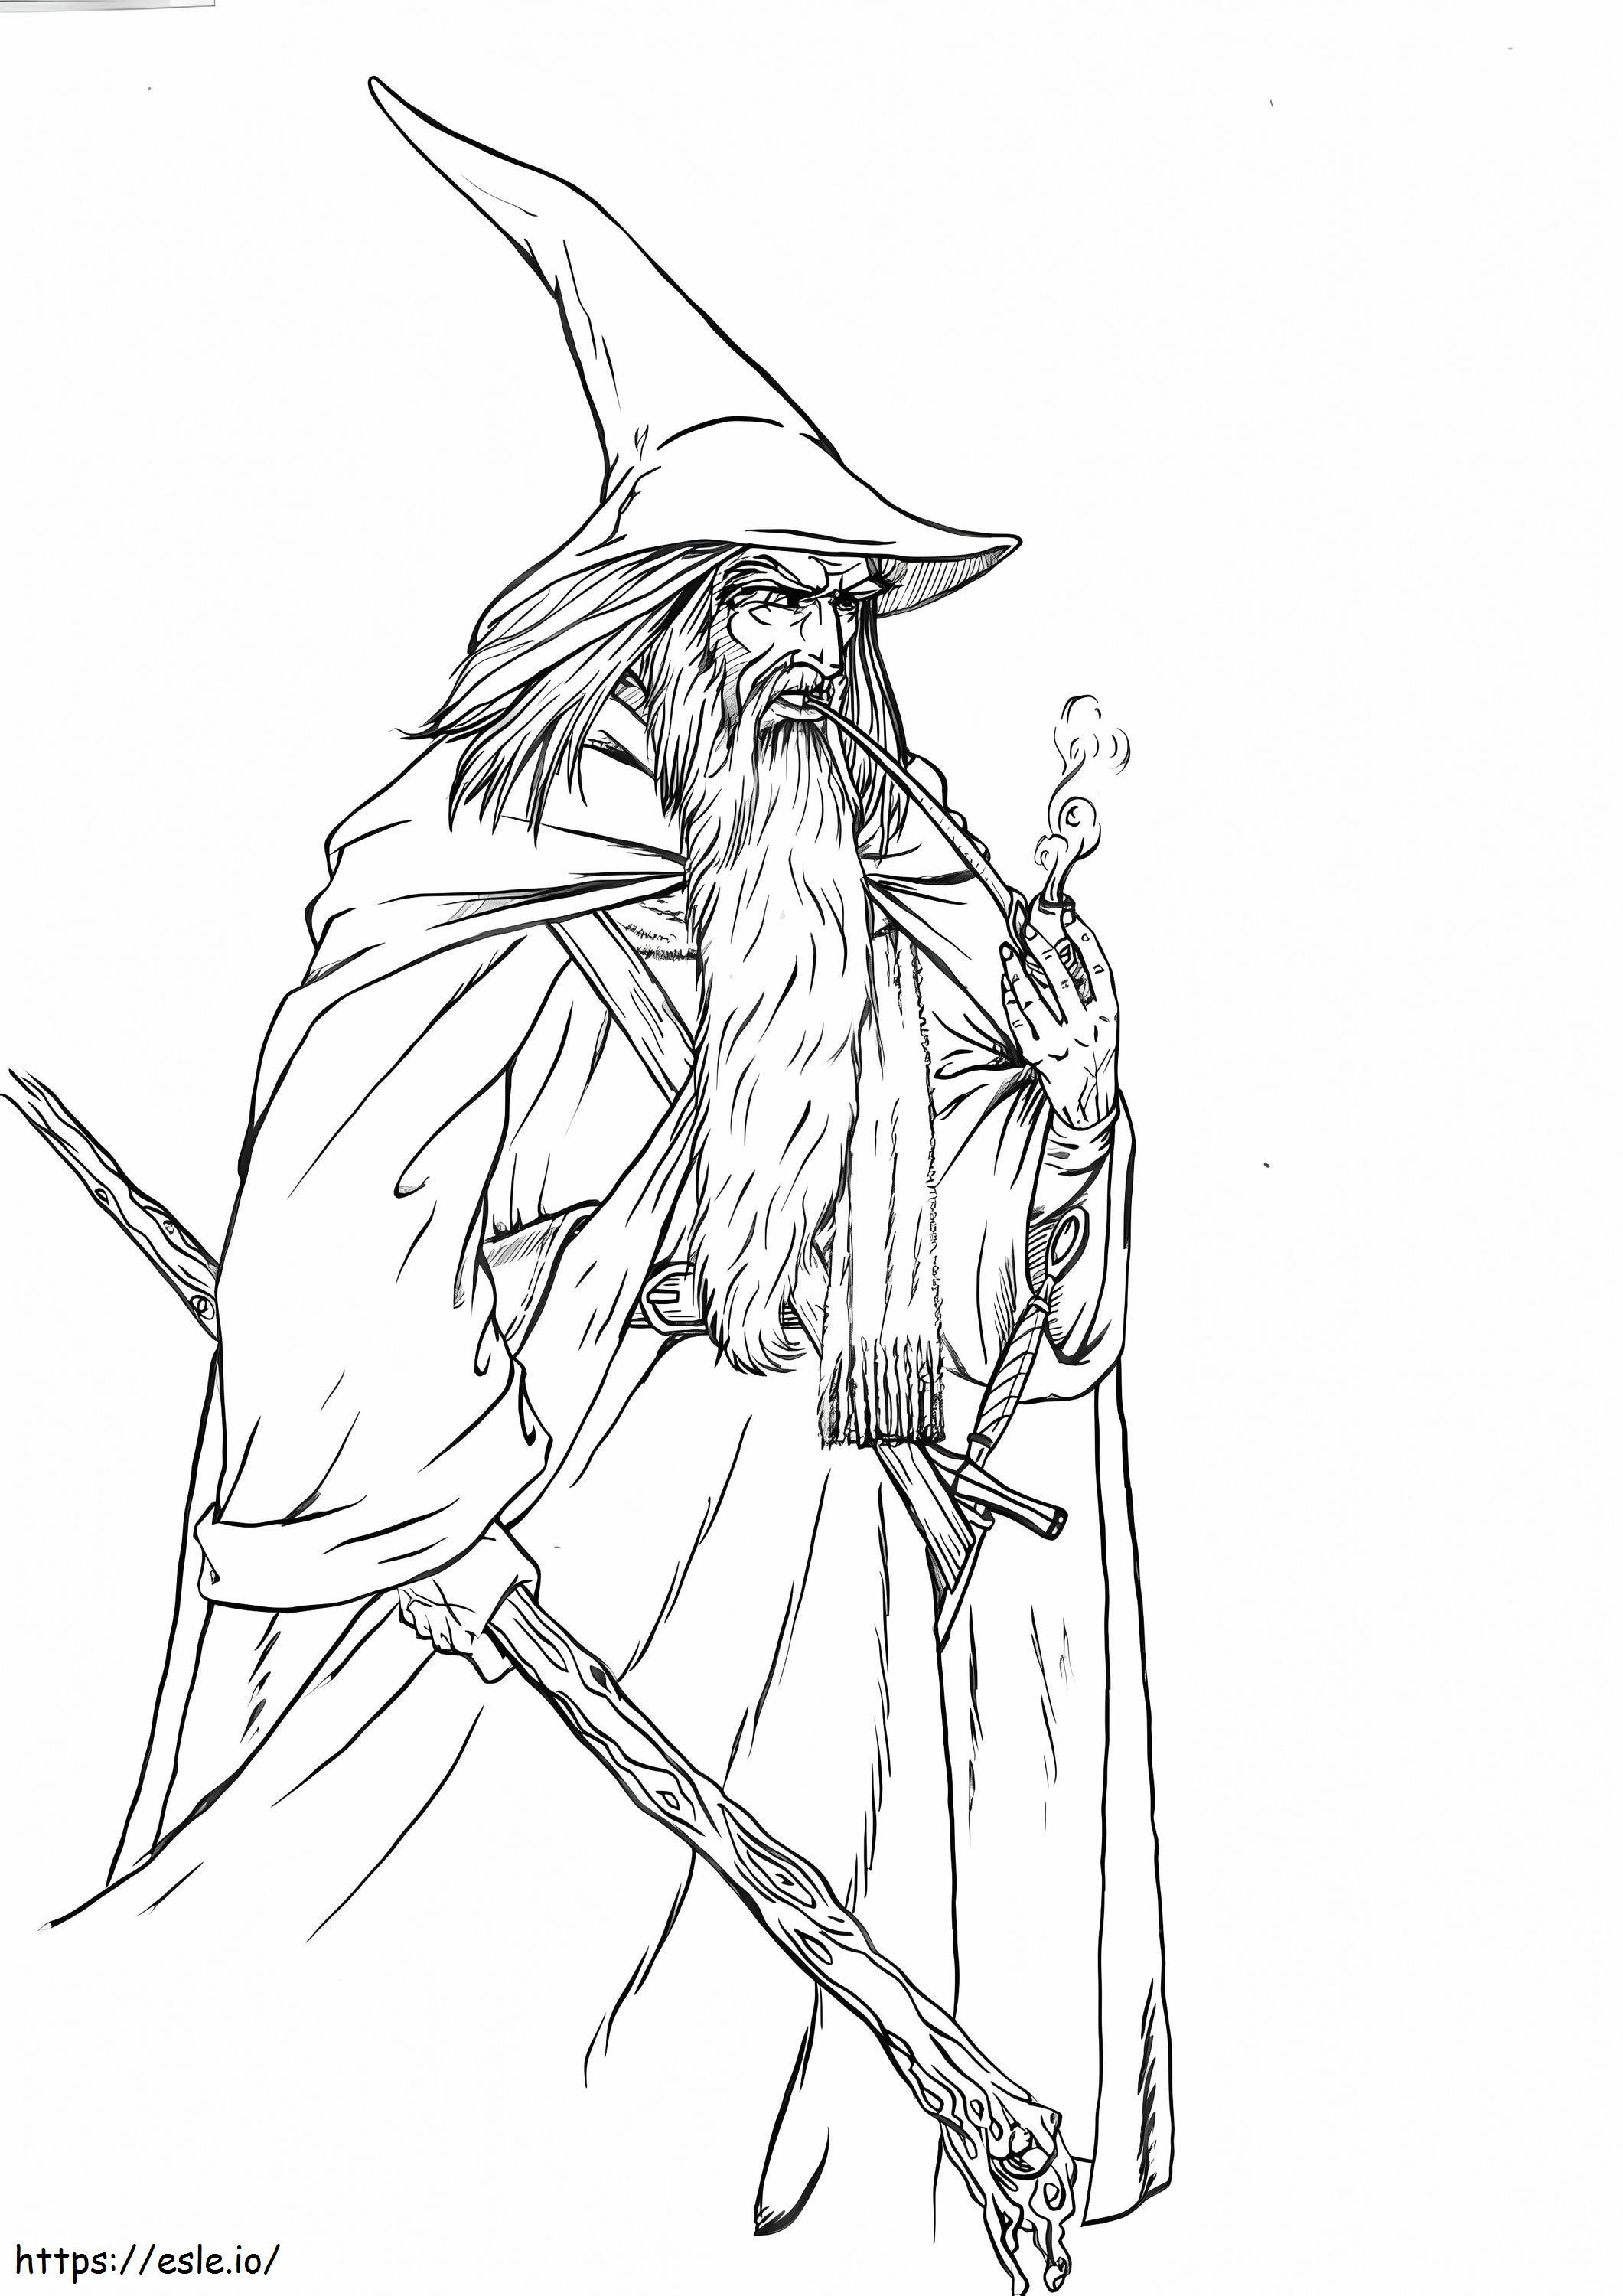 Gandalf coloring page